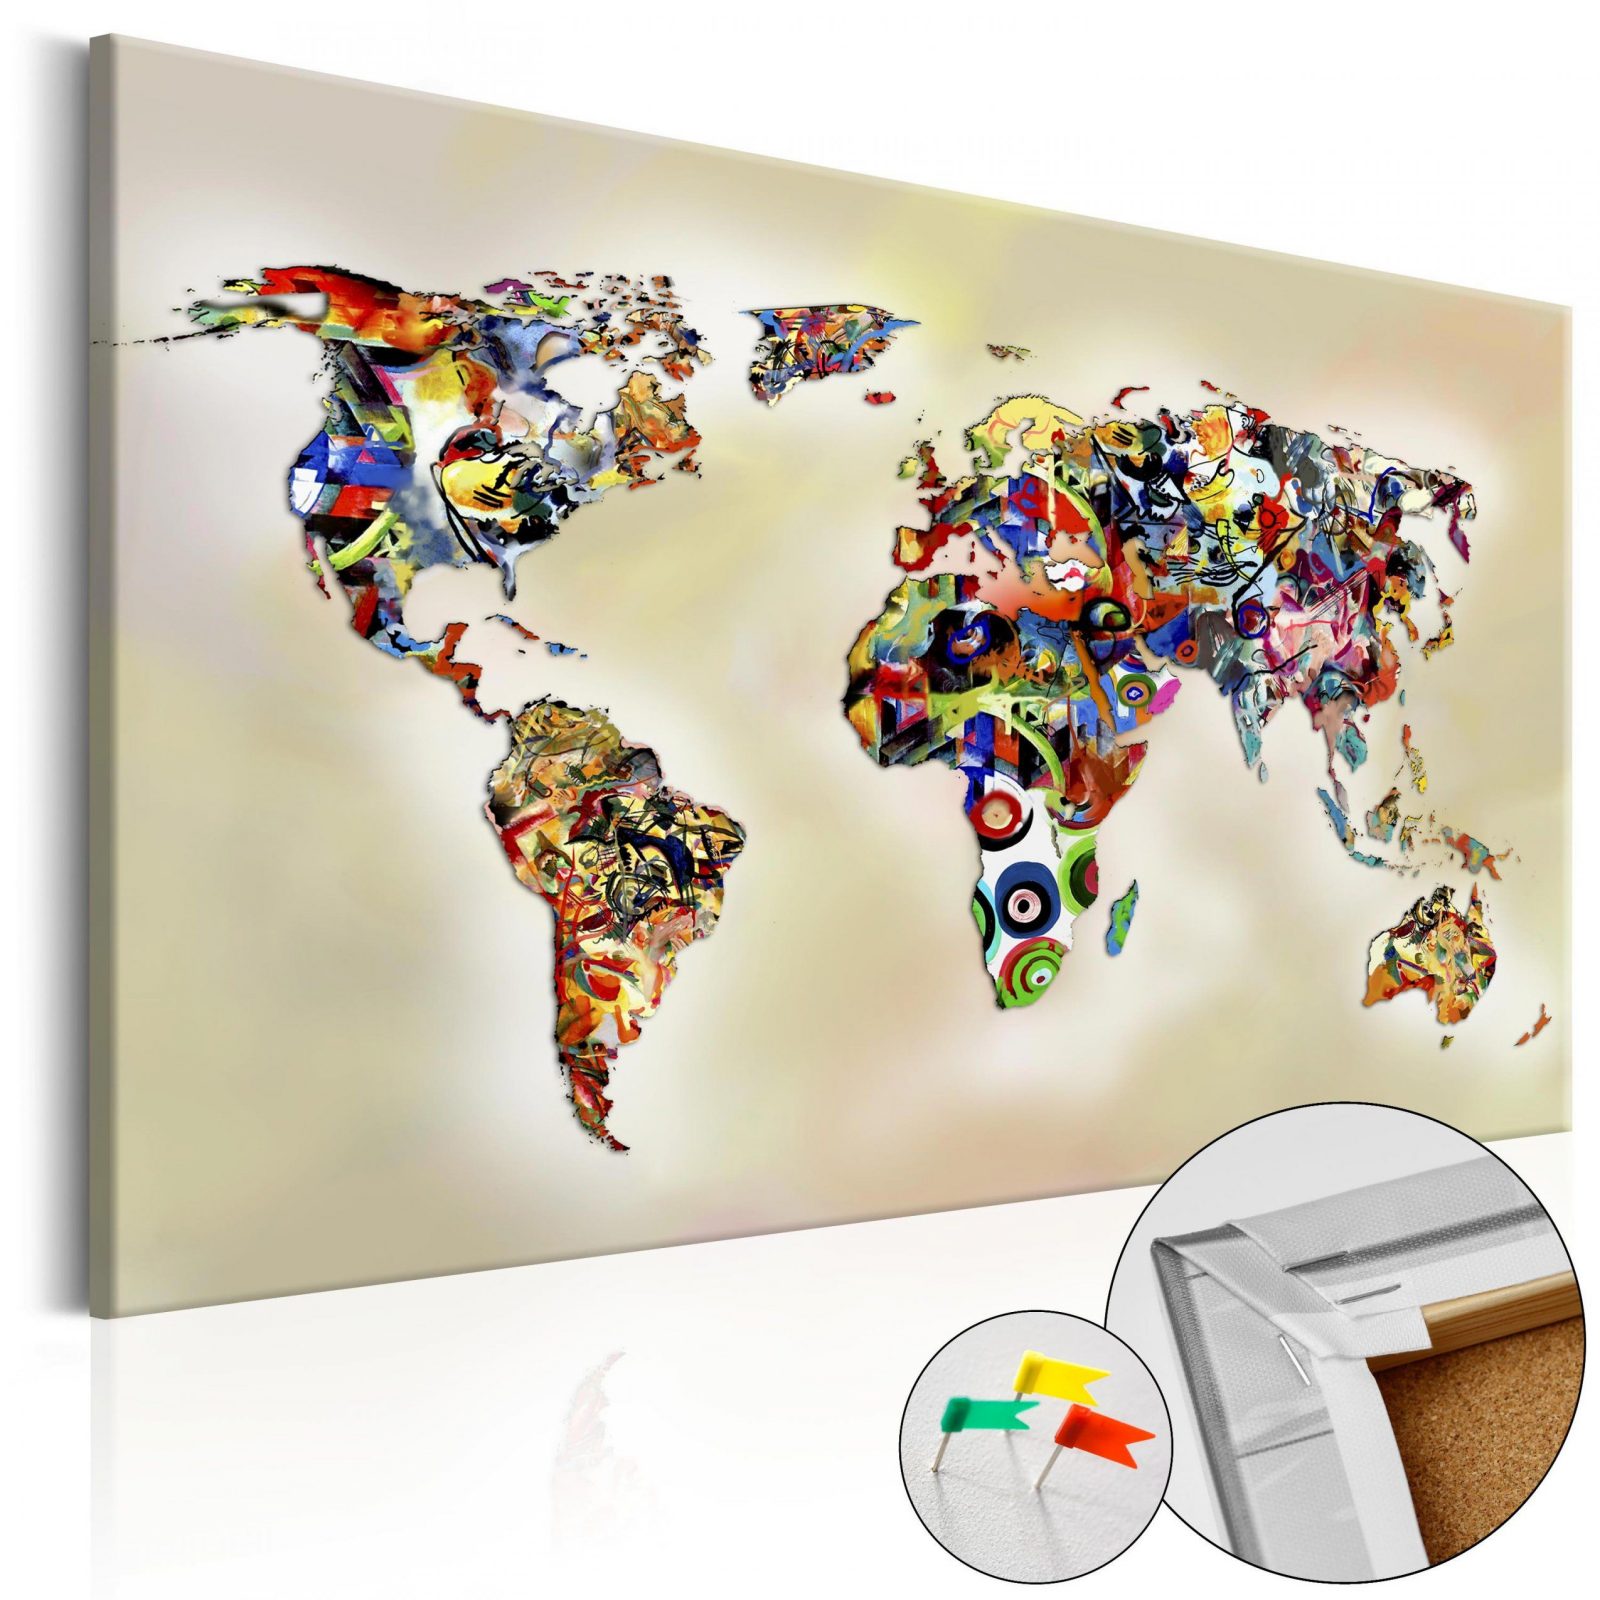 Luxus Pinnwand Kork Selber Machen Neuheit Leinwandbilder Kork von Weltkarte Kork Selber Machen Bild